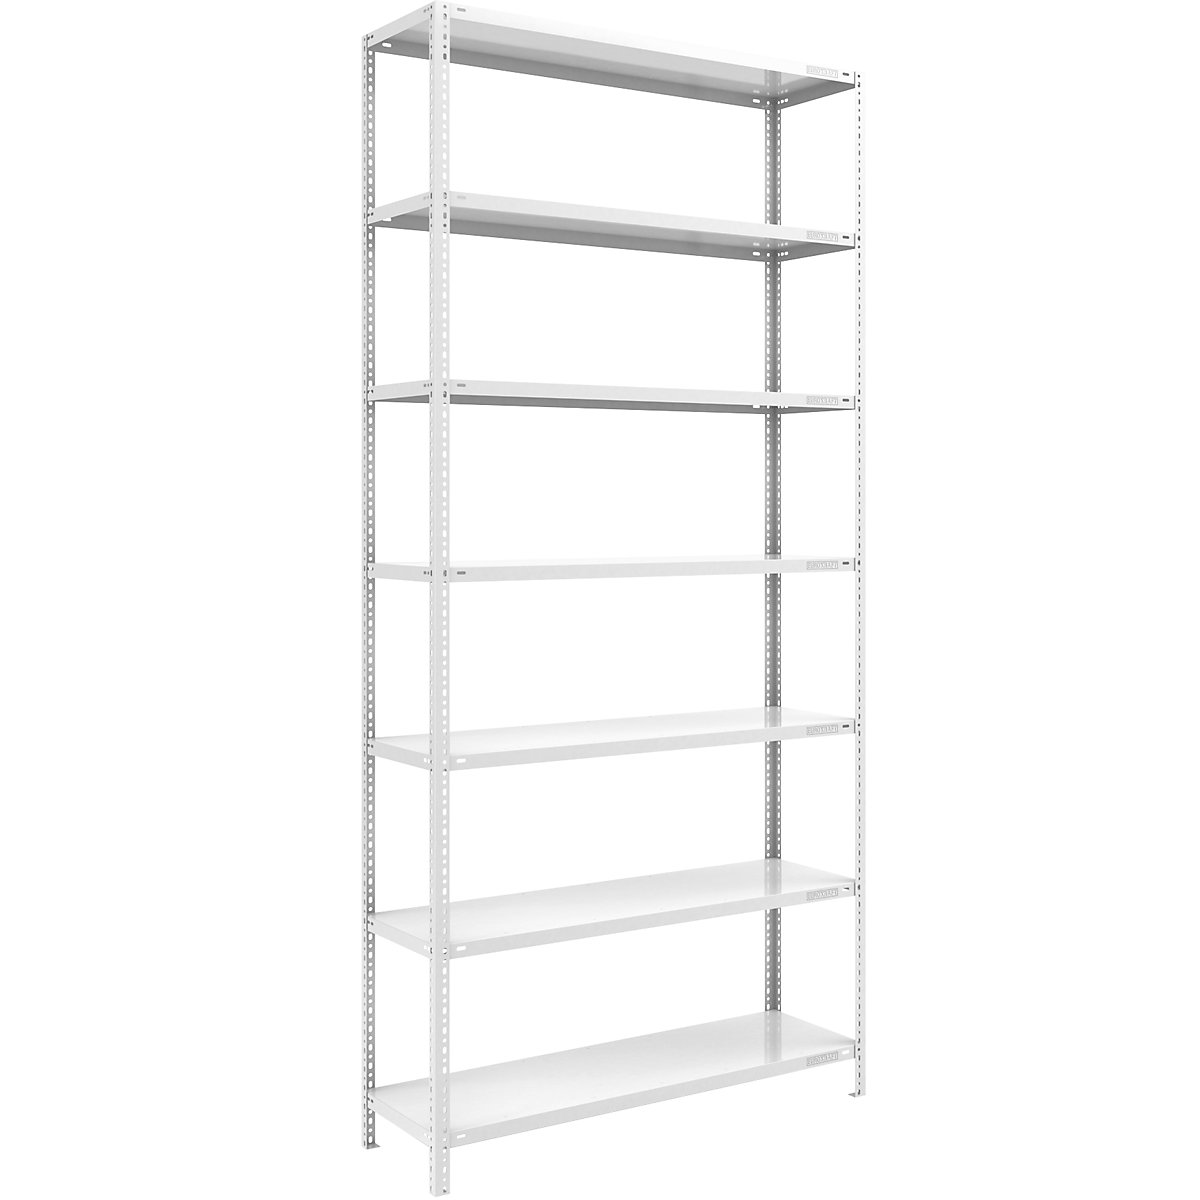 Bolt-together shelf unit, light duty, plastic coated – eurokraft pro, shelf unit height 3000 mm, shelf width 1300 mm, depth 500 mm, standard shelf unit-8